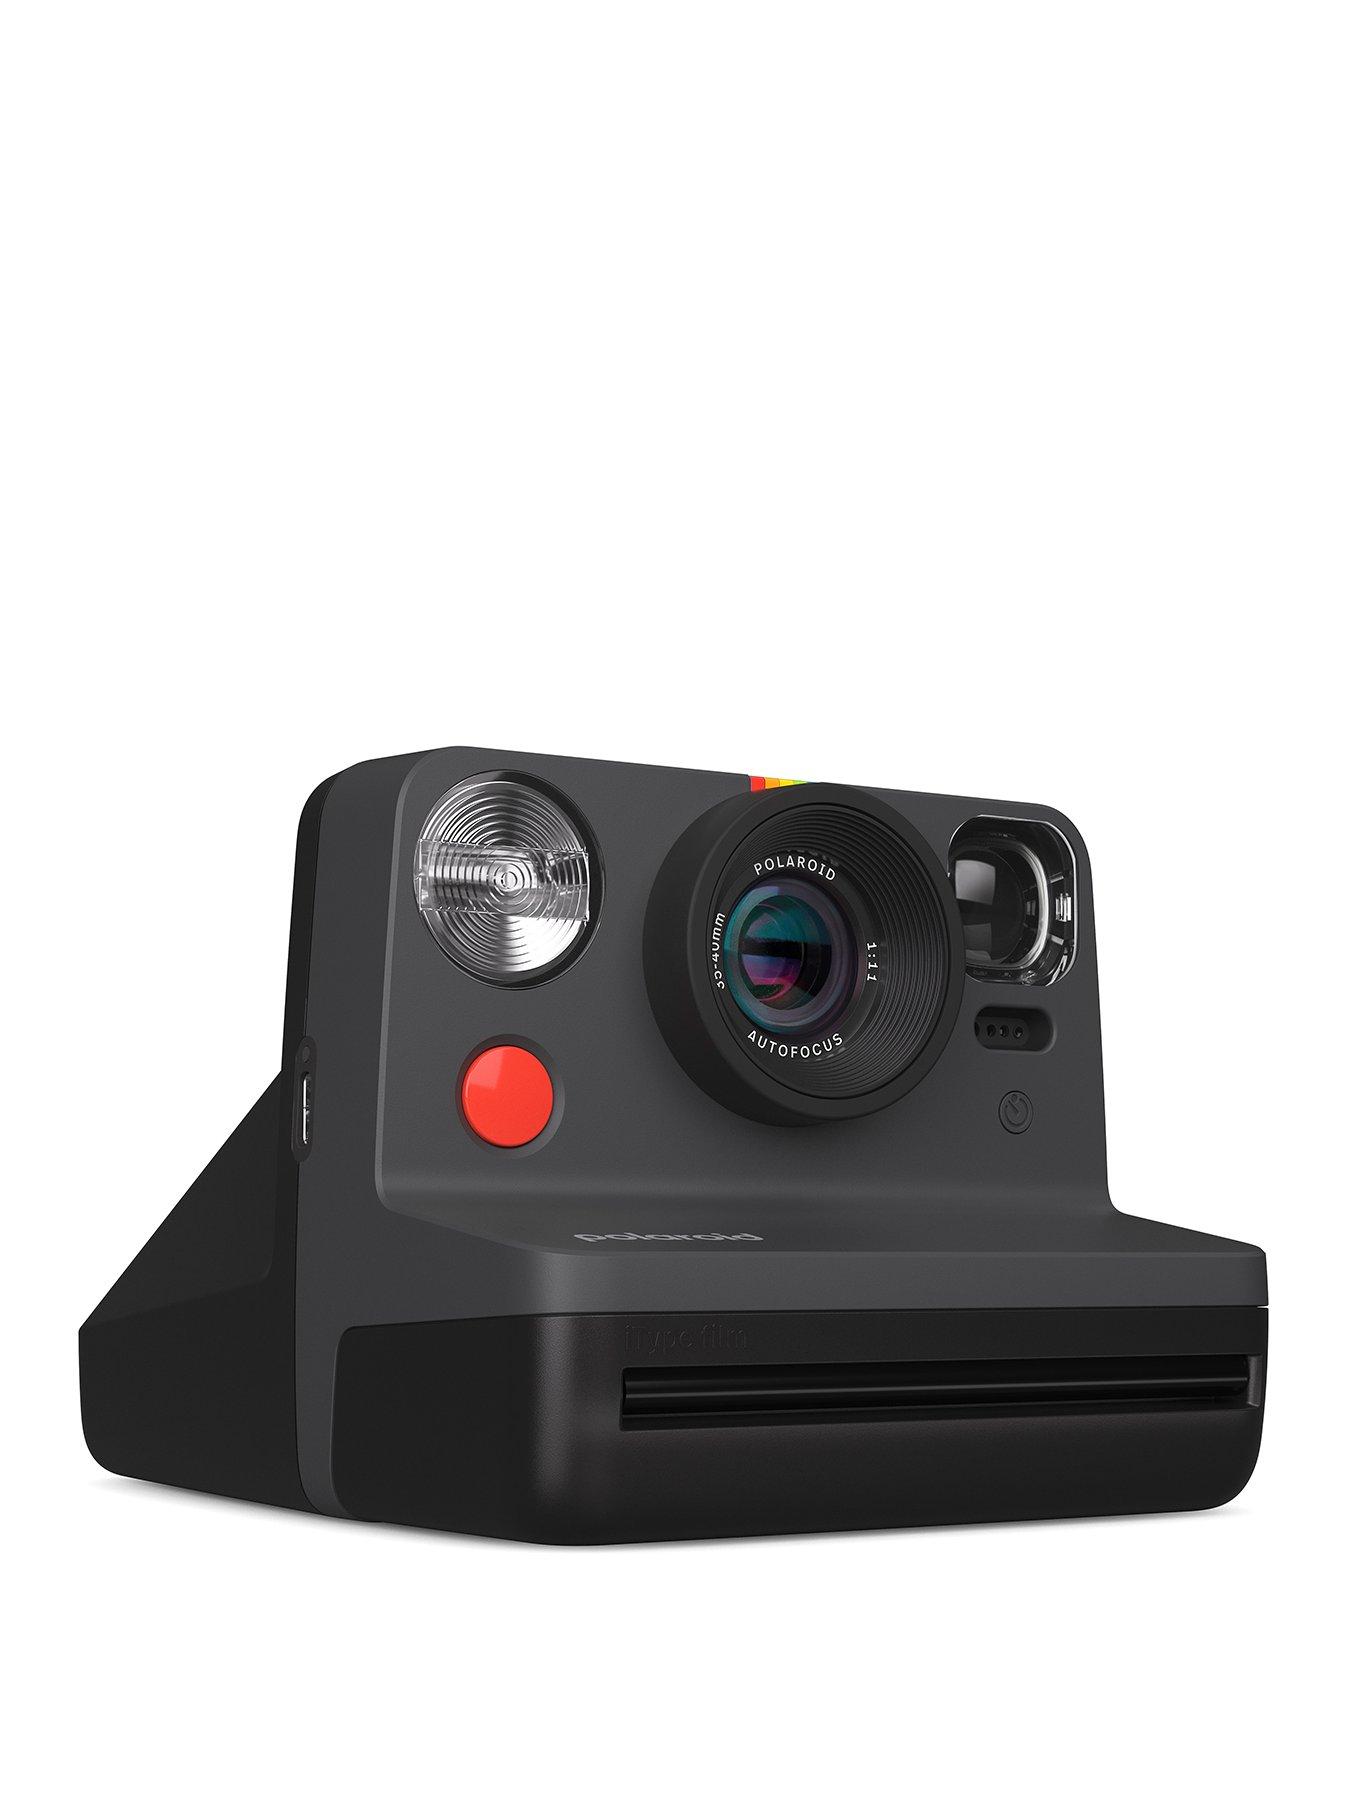 Polaroid GO Generation 2 Instant Camera (Black)